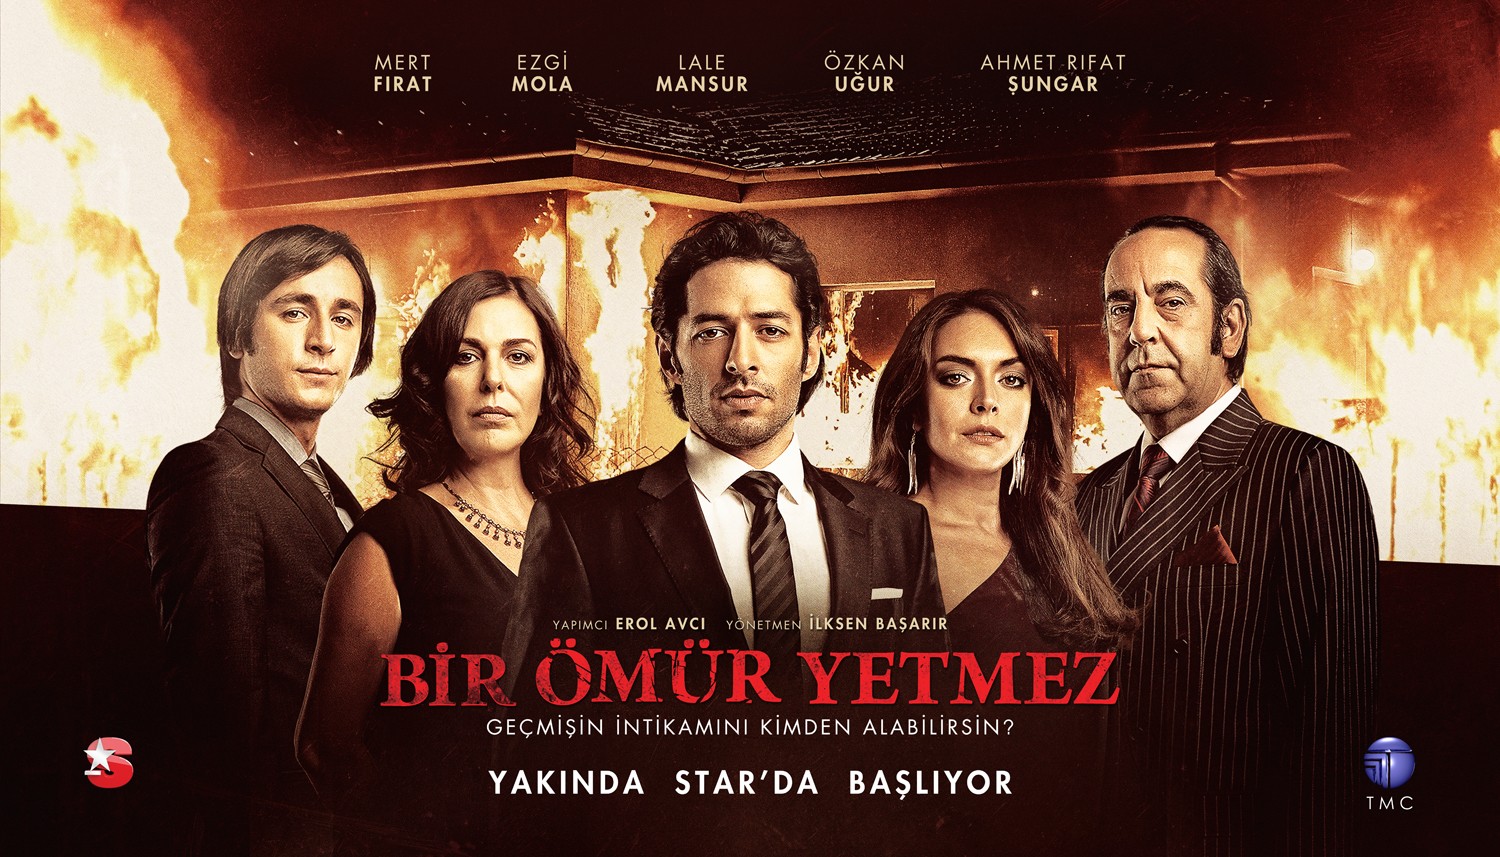 Extra Large TV Poster Image for Bir Ömür Yetmez (#1 of 2)